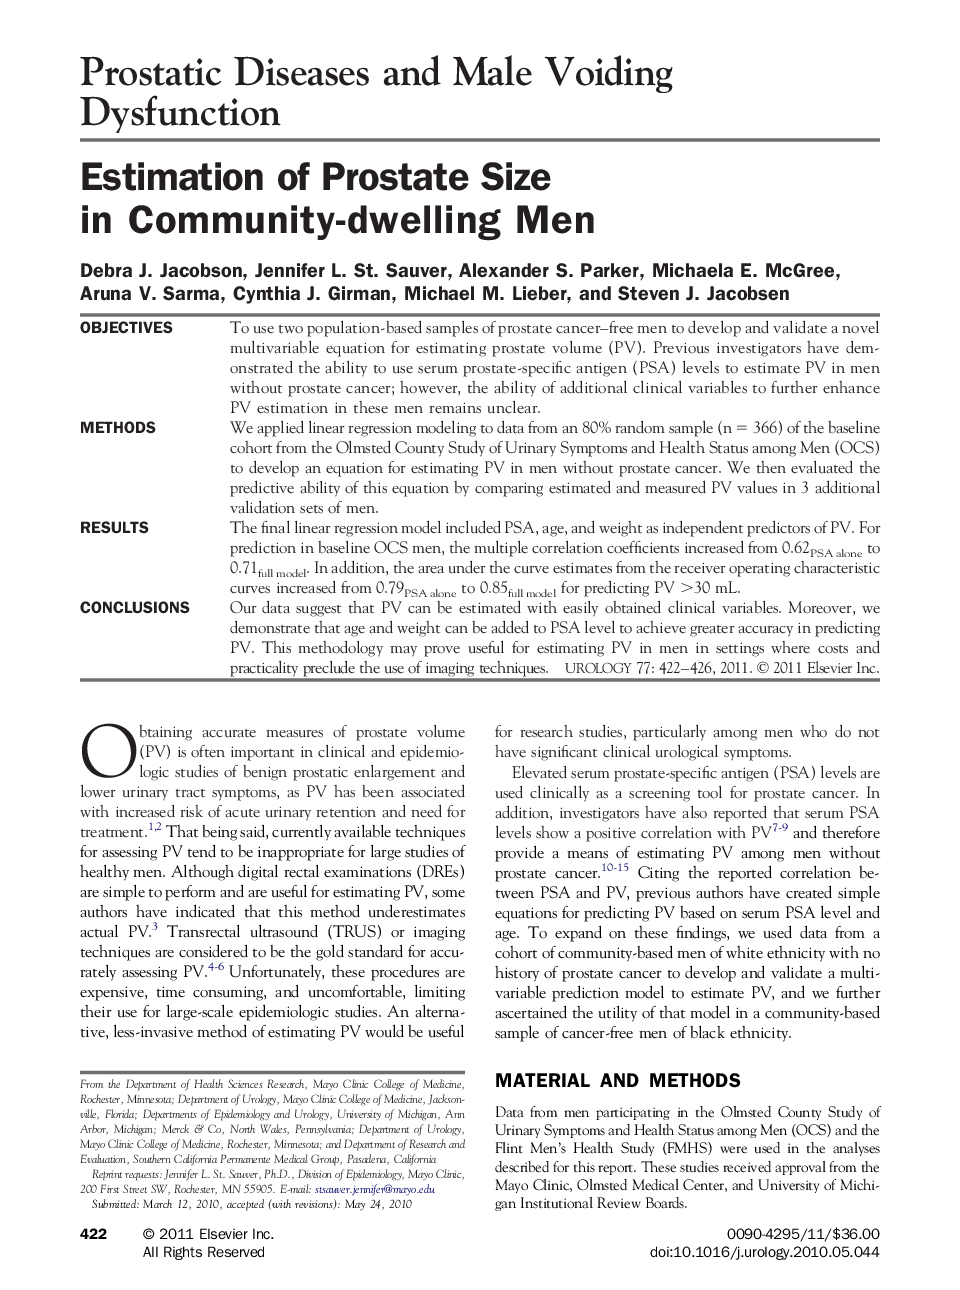 Estimation of Prostate Size in Community-dwelling Men